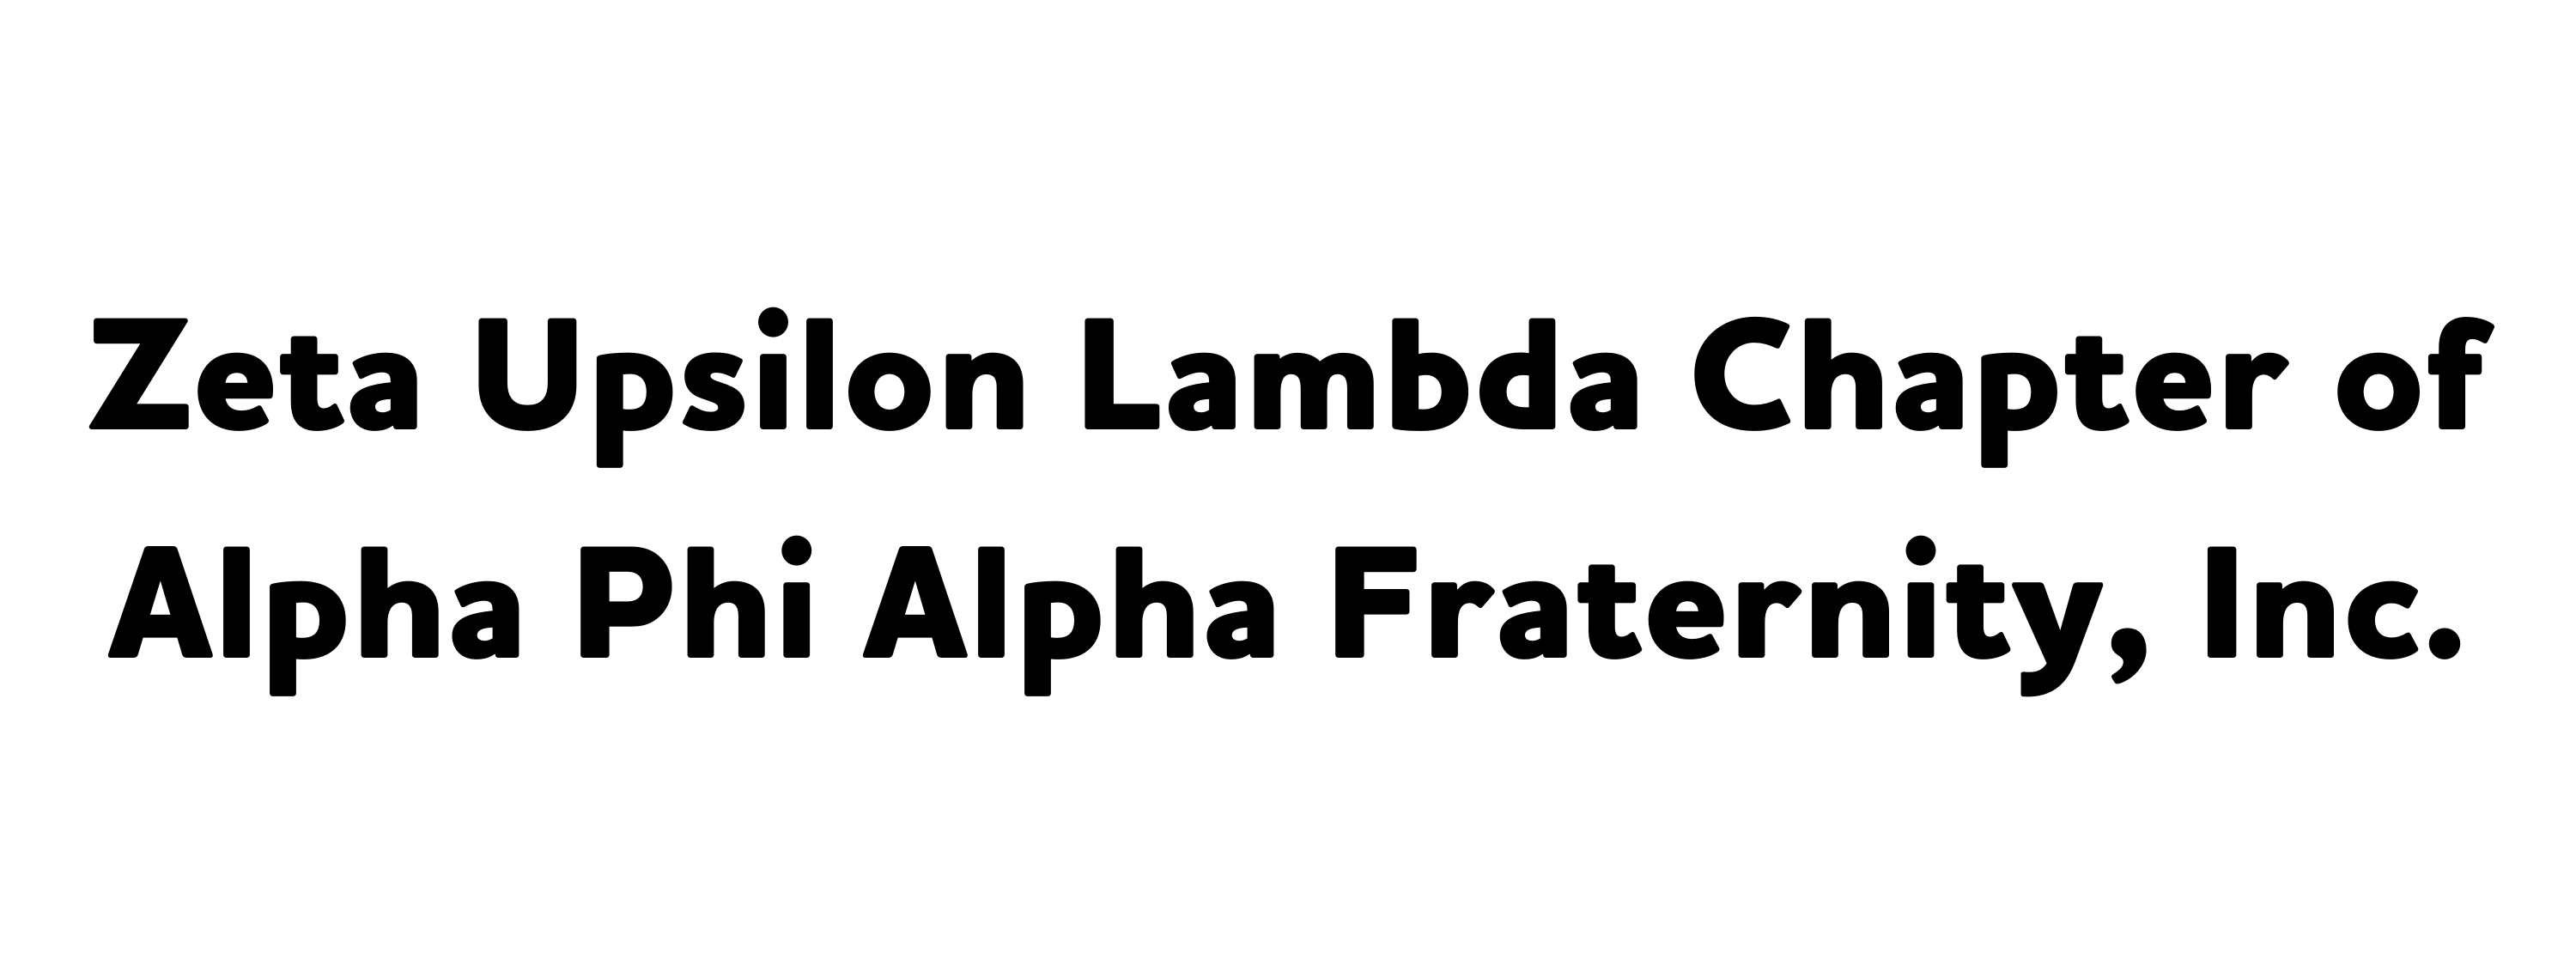 4. Alpha Phi Alpha Fraternity (Friend)